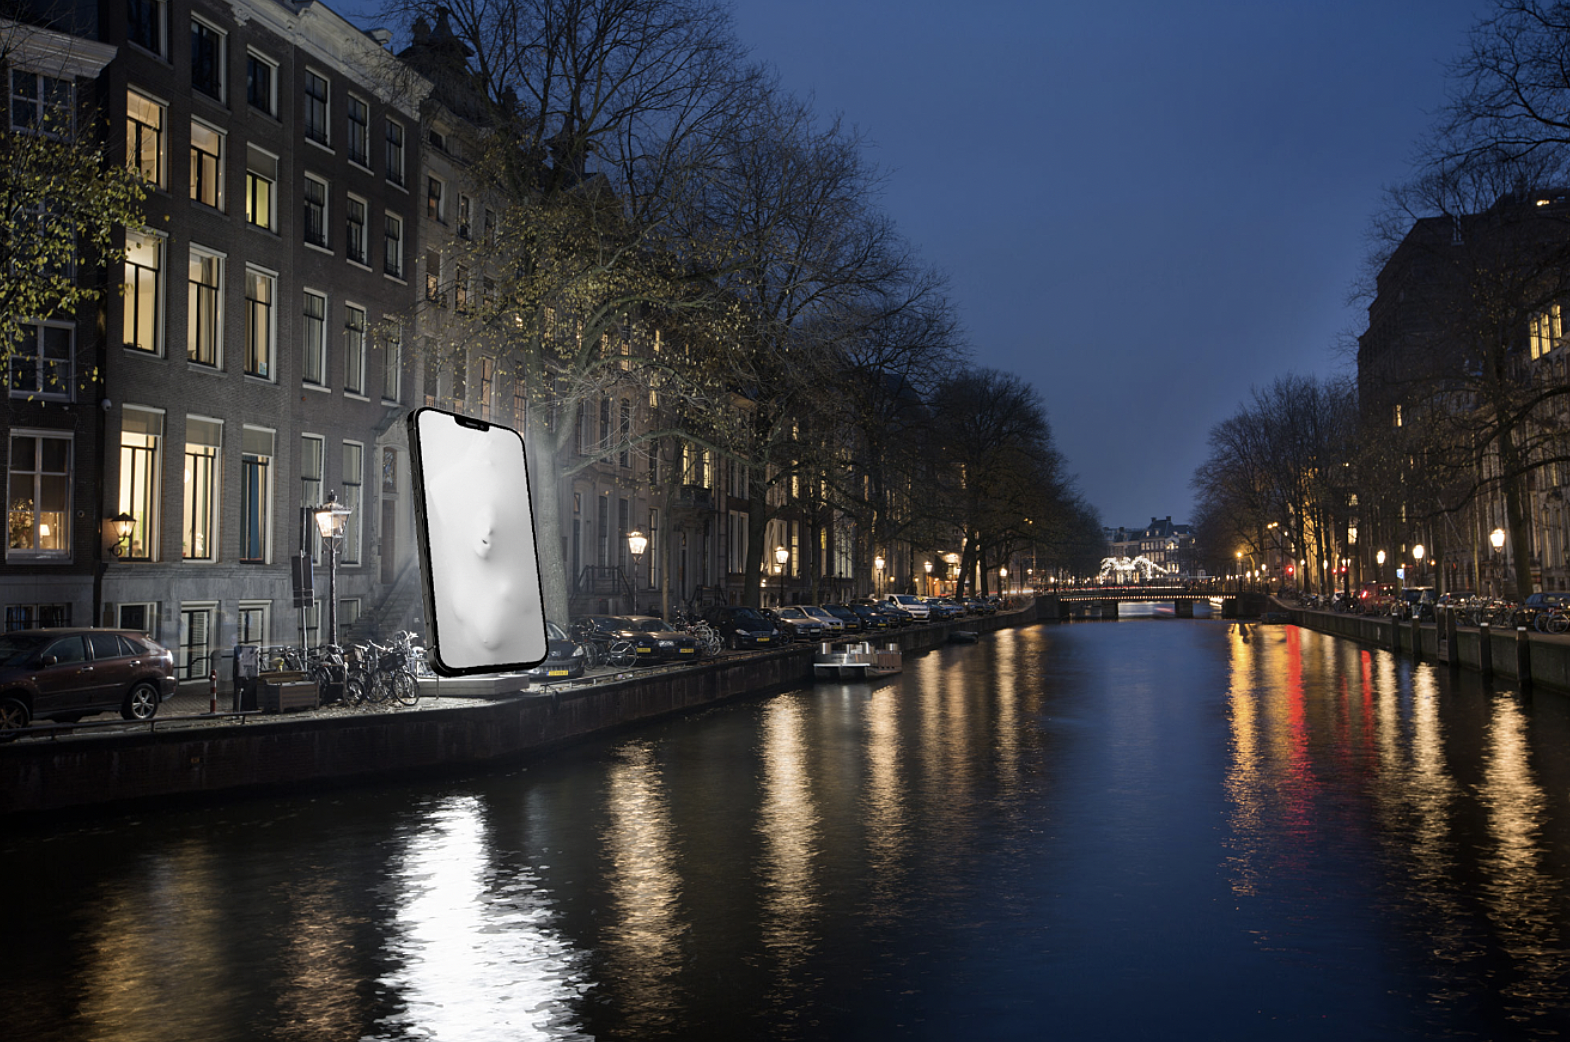 Amsterdam Boats Amsterdam Light Festival header image